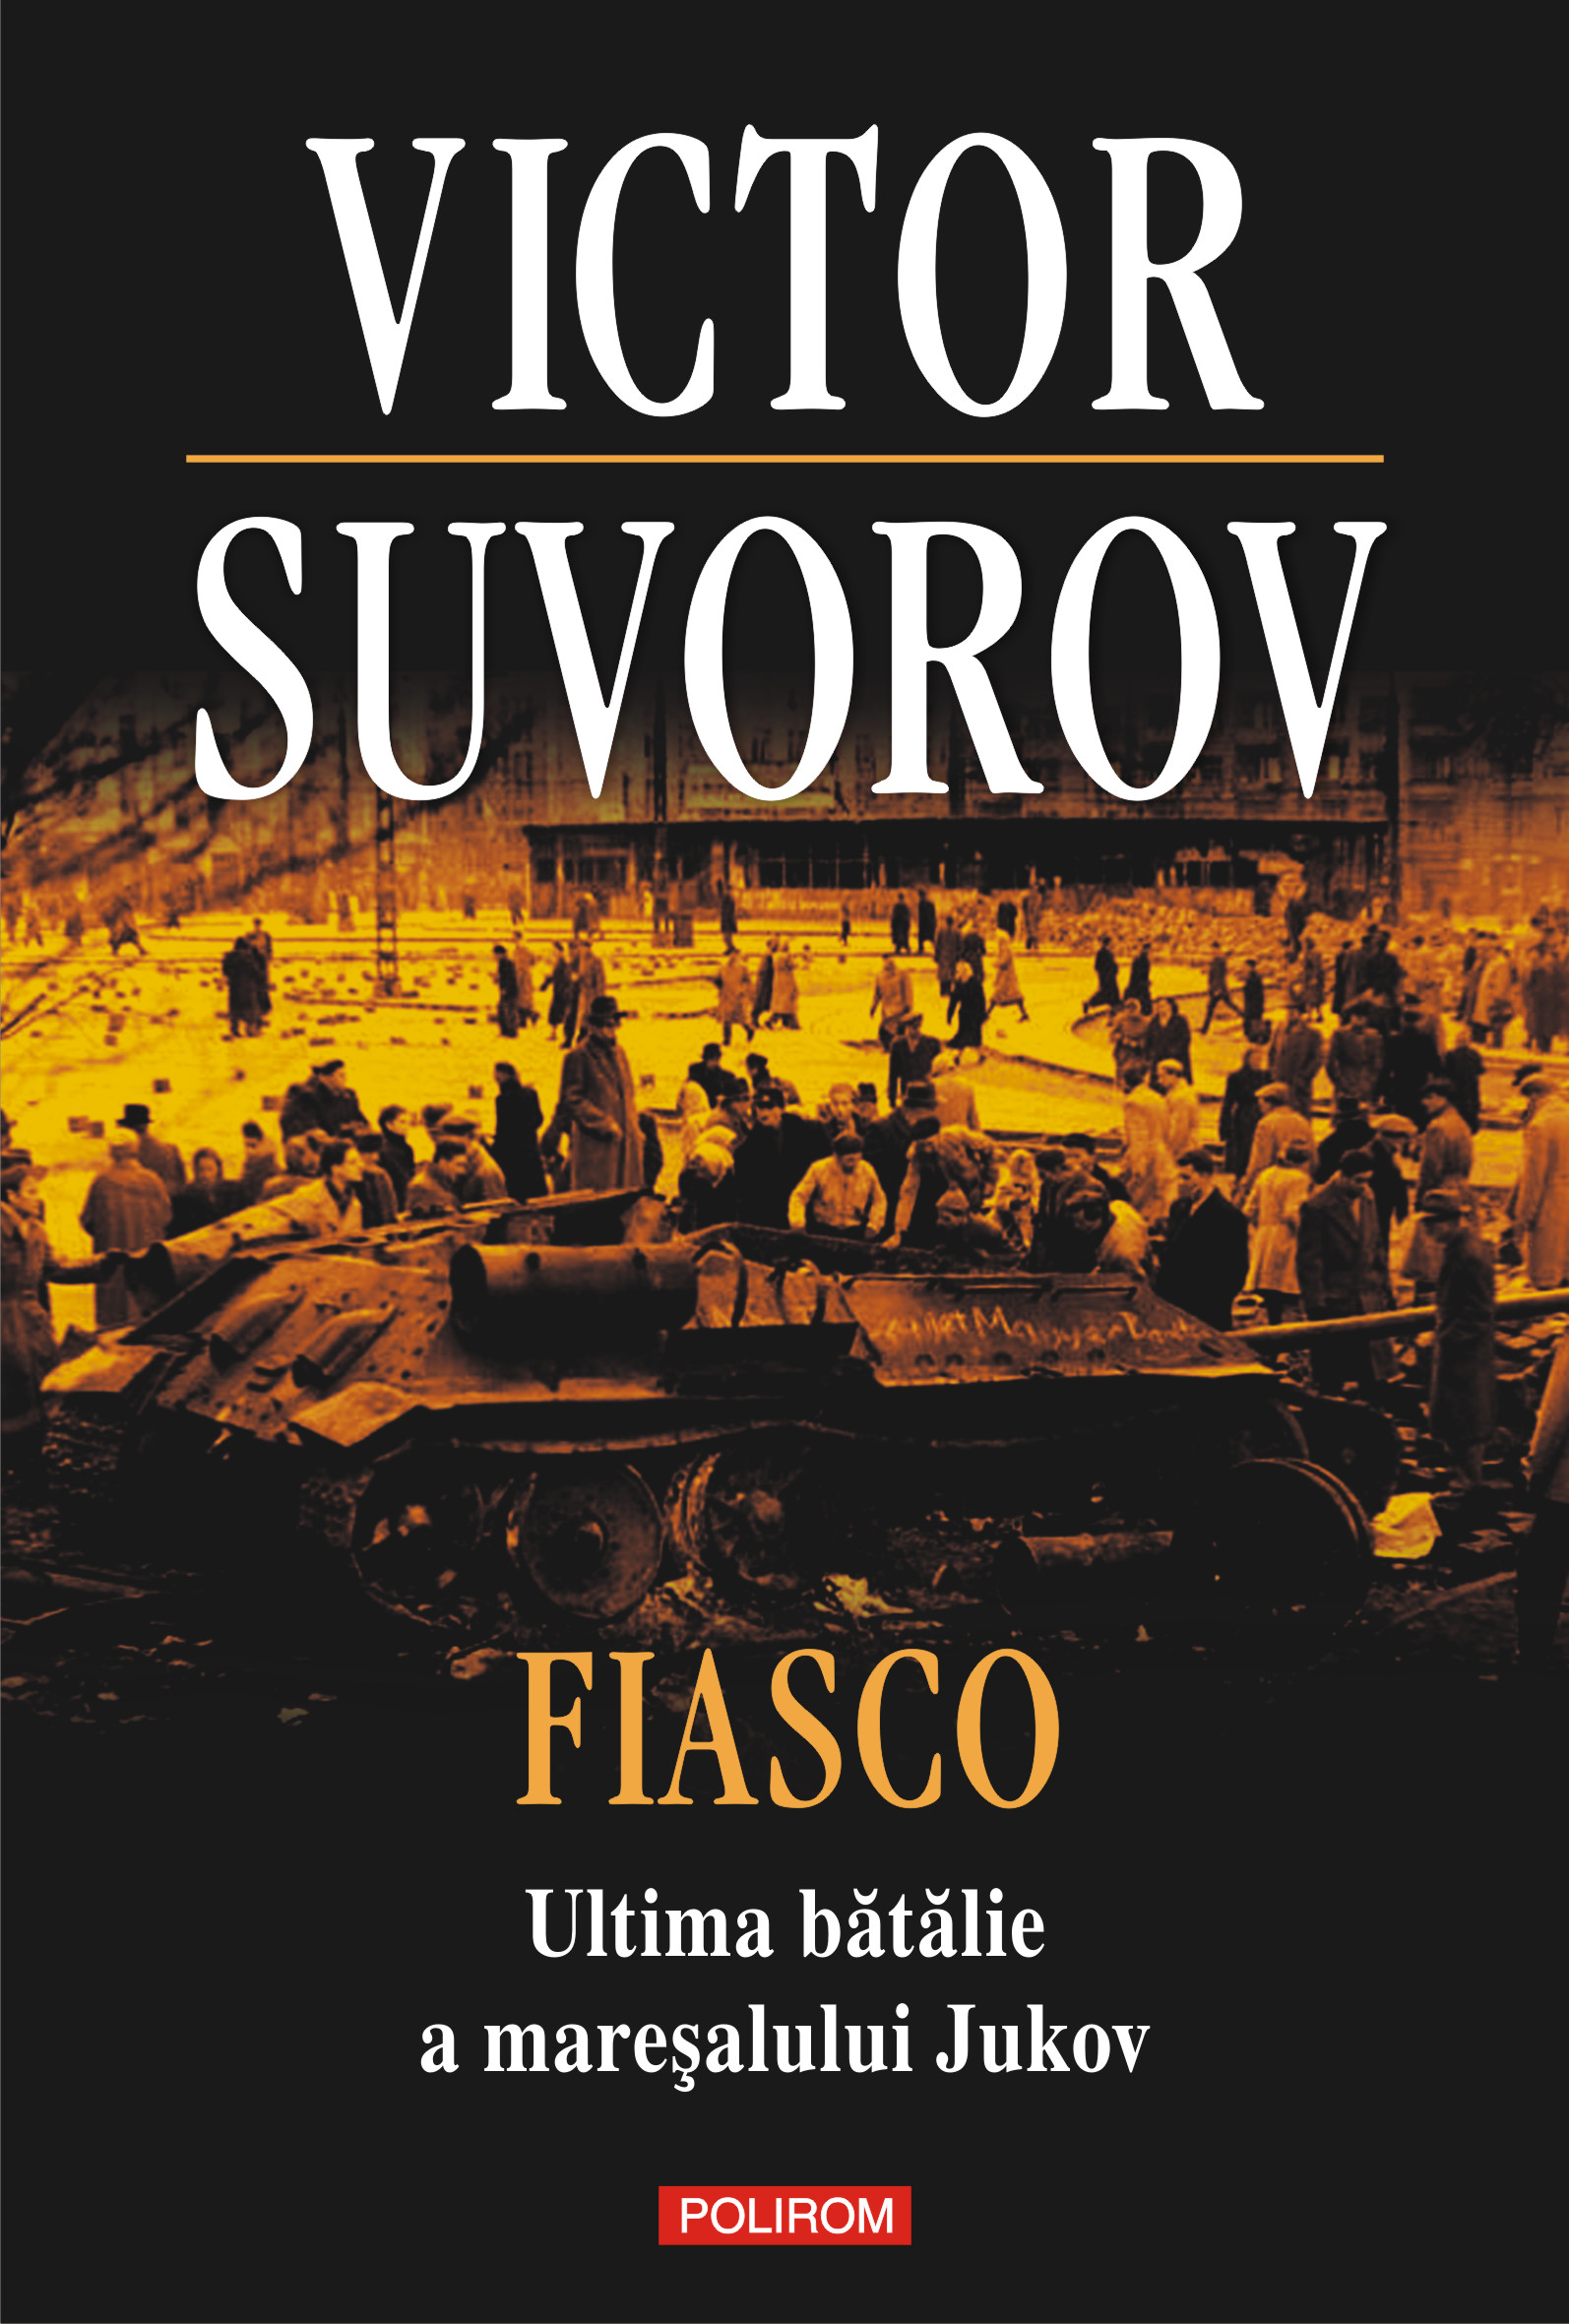 eBook Fiasco. Ultima batalie a maresalului Jukov - Victor Suvorov